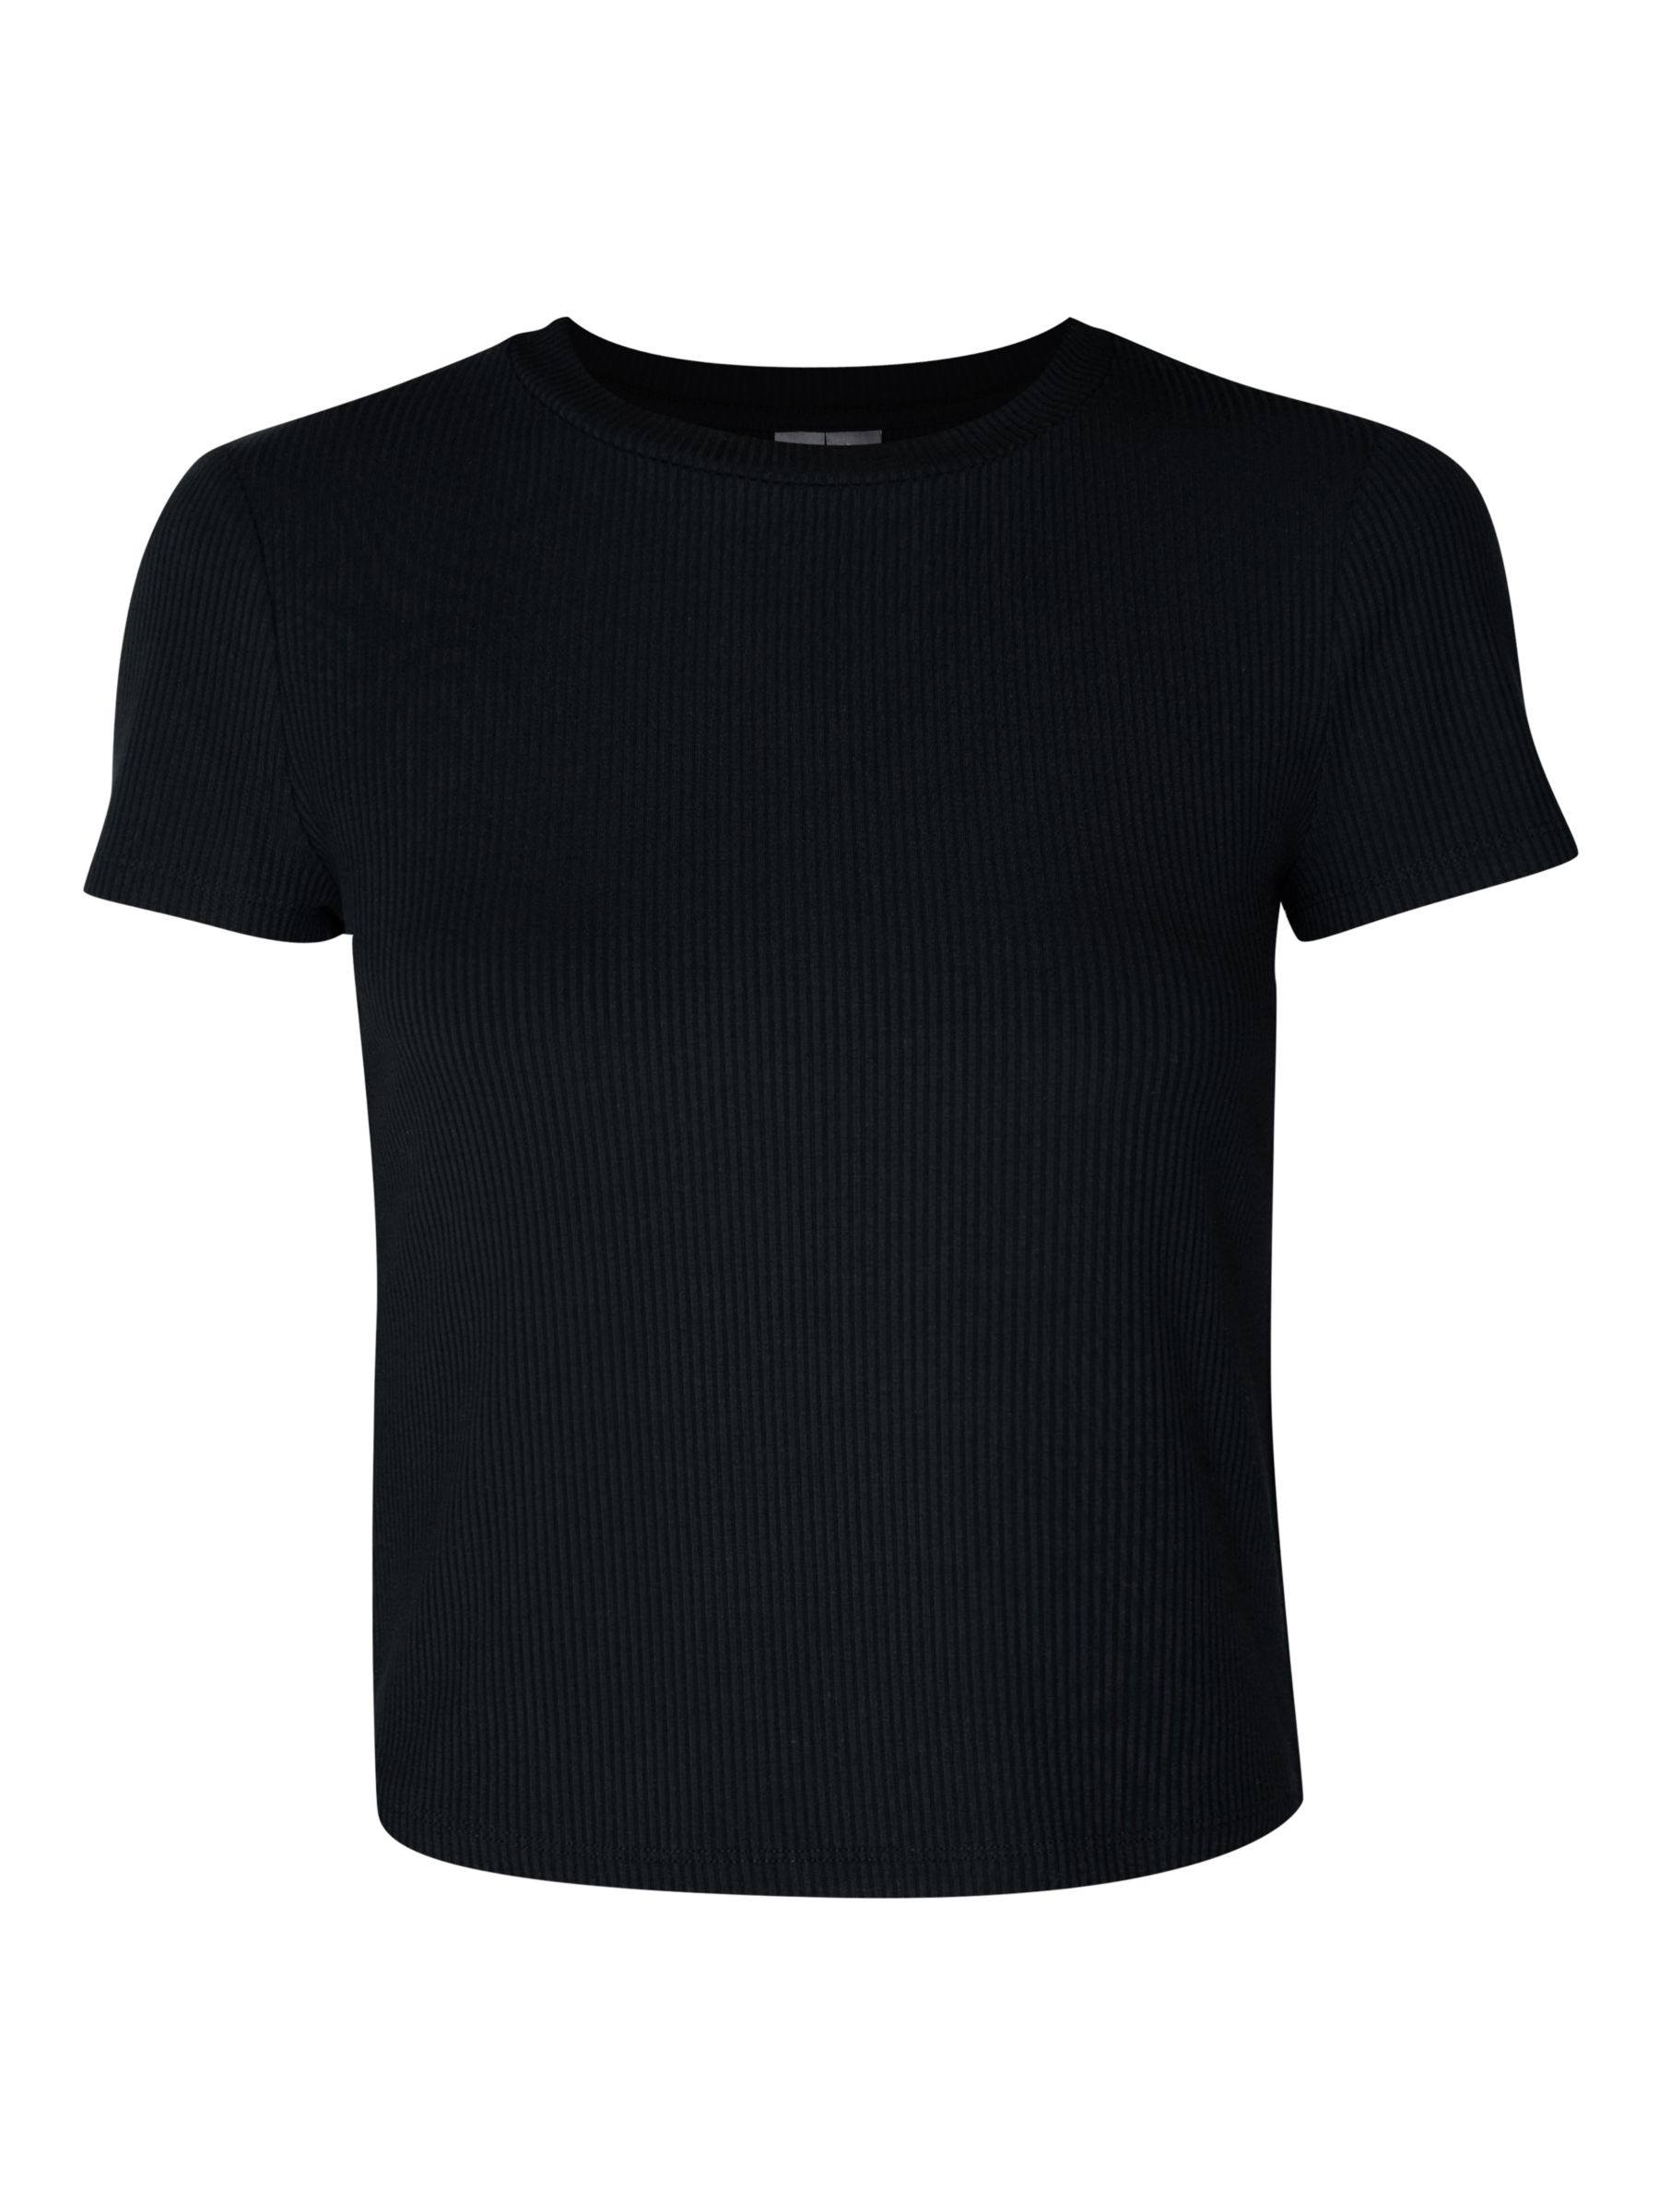 Sweaty Betty Harper Short Sleeve T-Shirt, Black at John Lewis & Partners